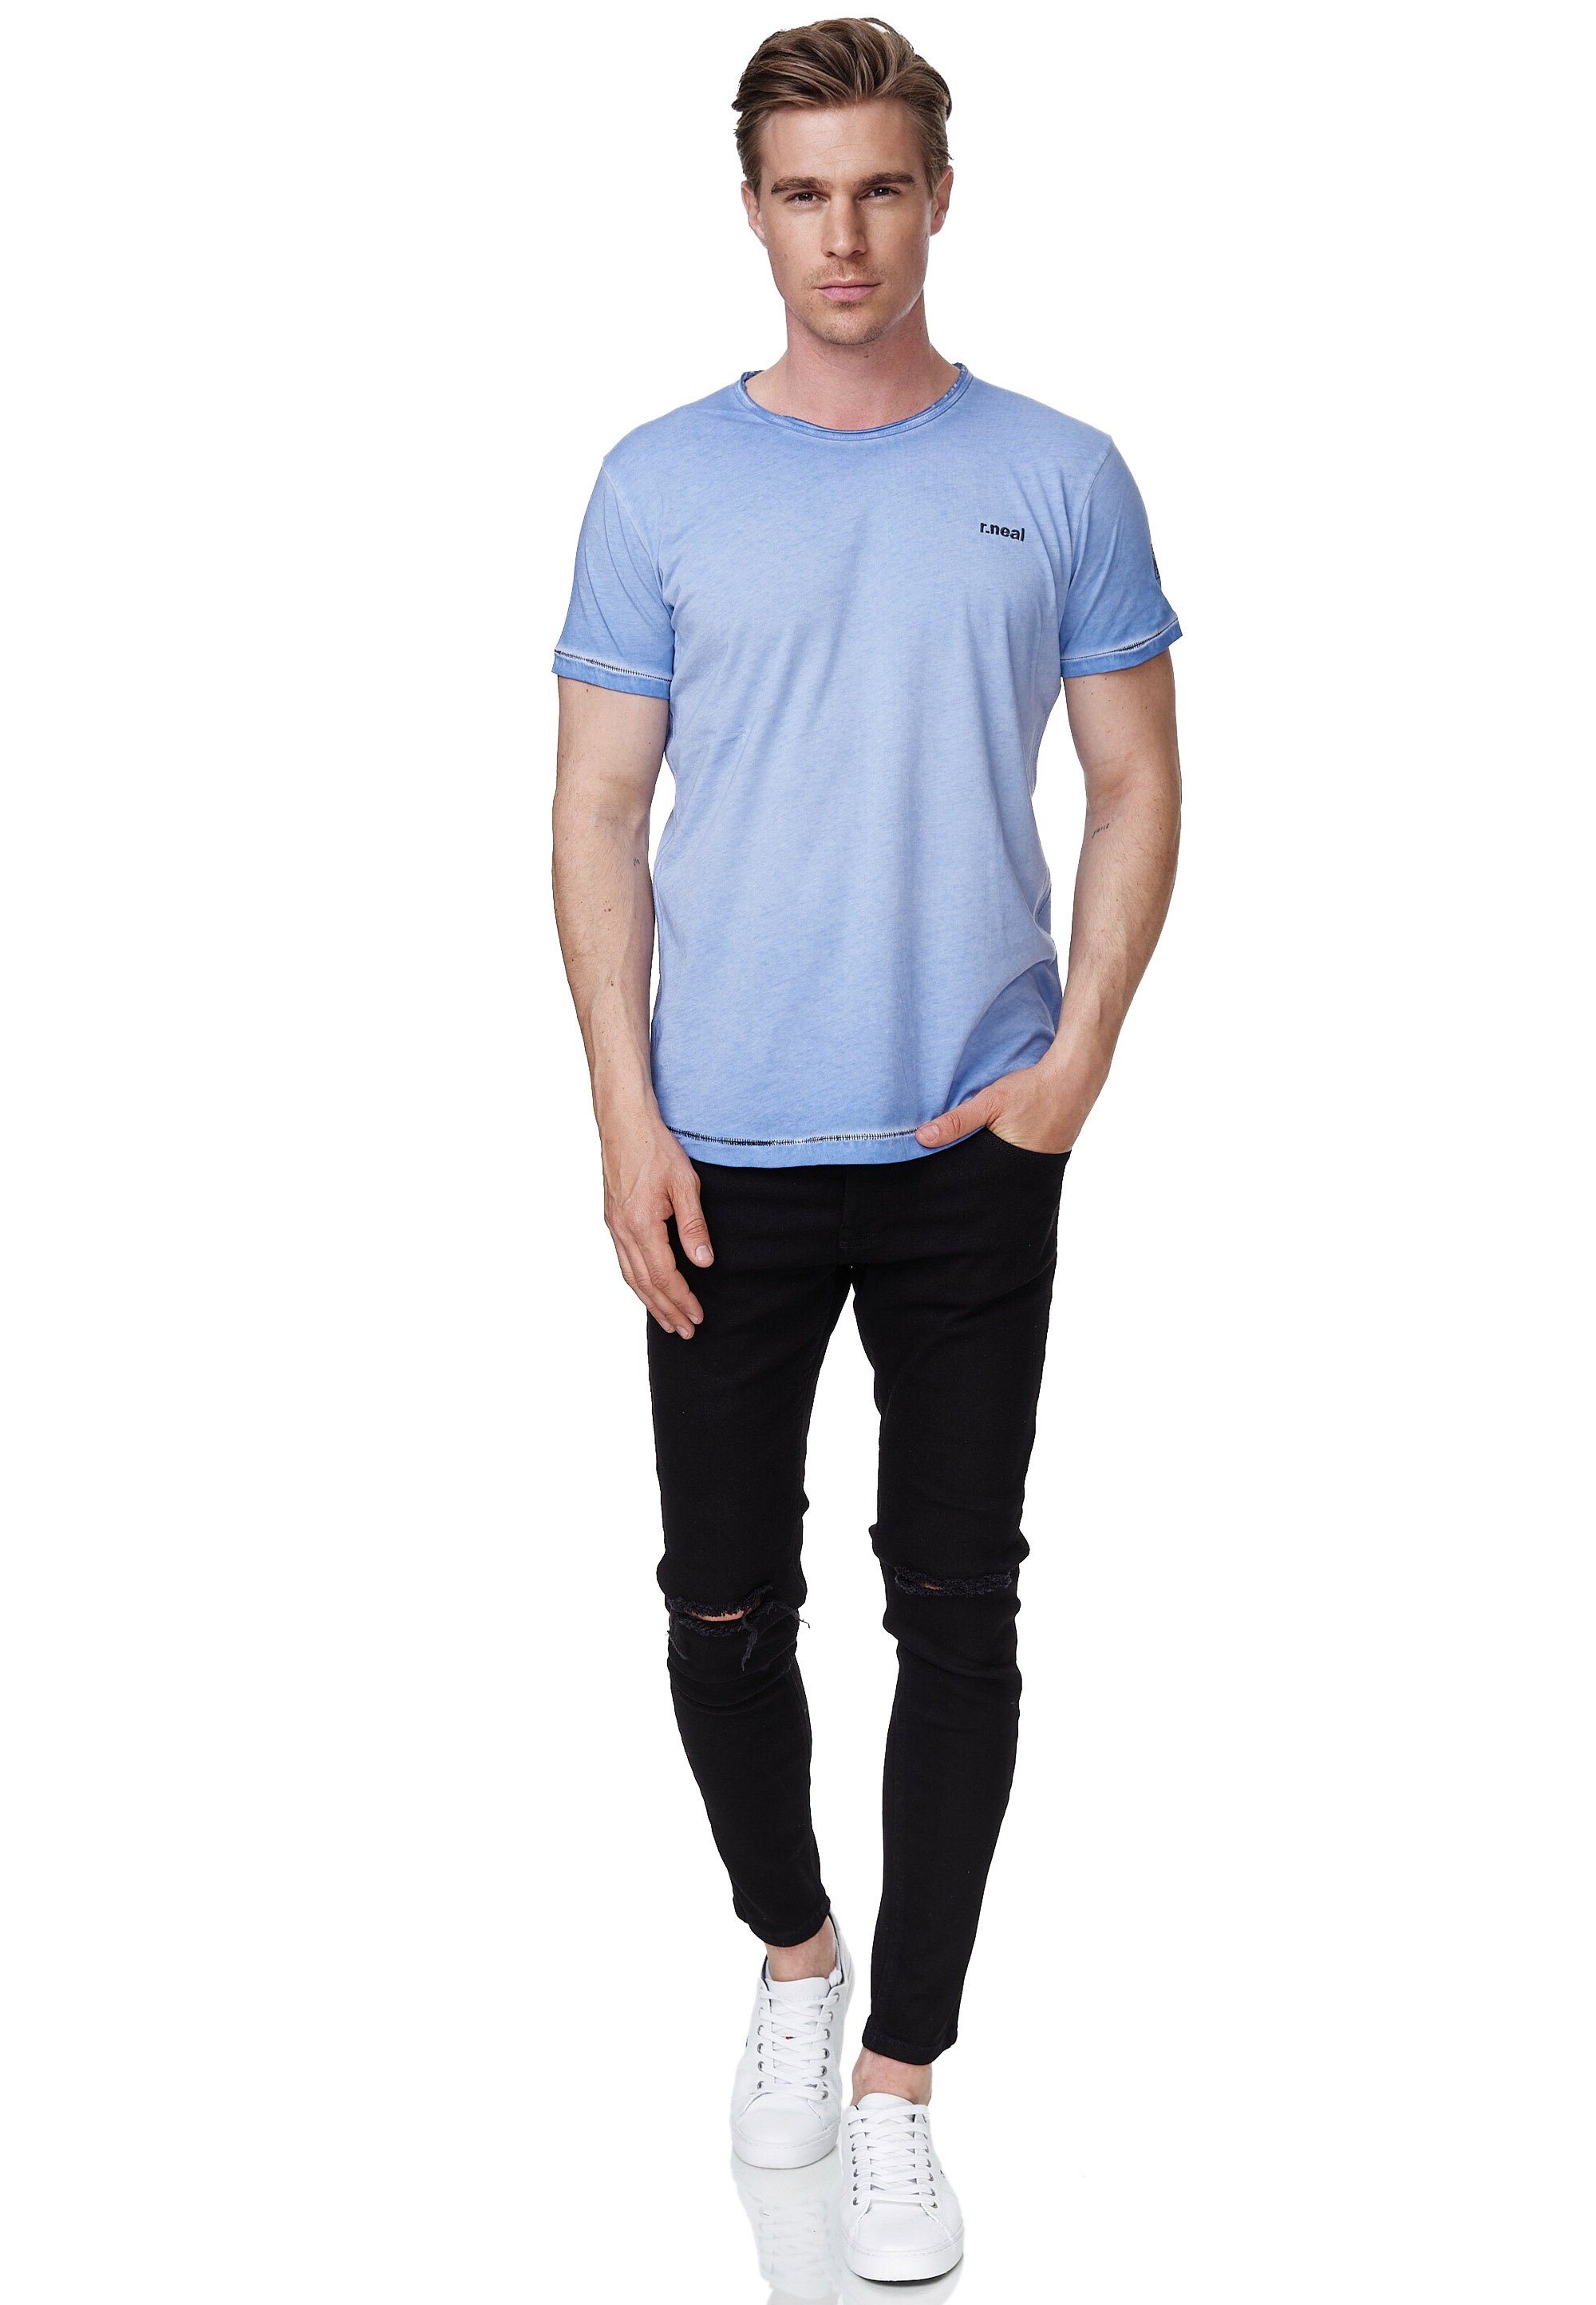 Rusty Neal T-Shirt im trendigen blau Vintage-Look